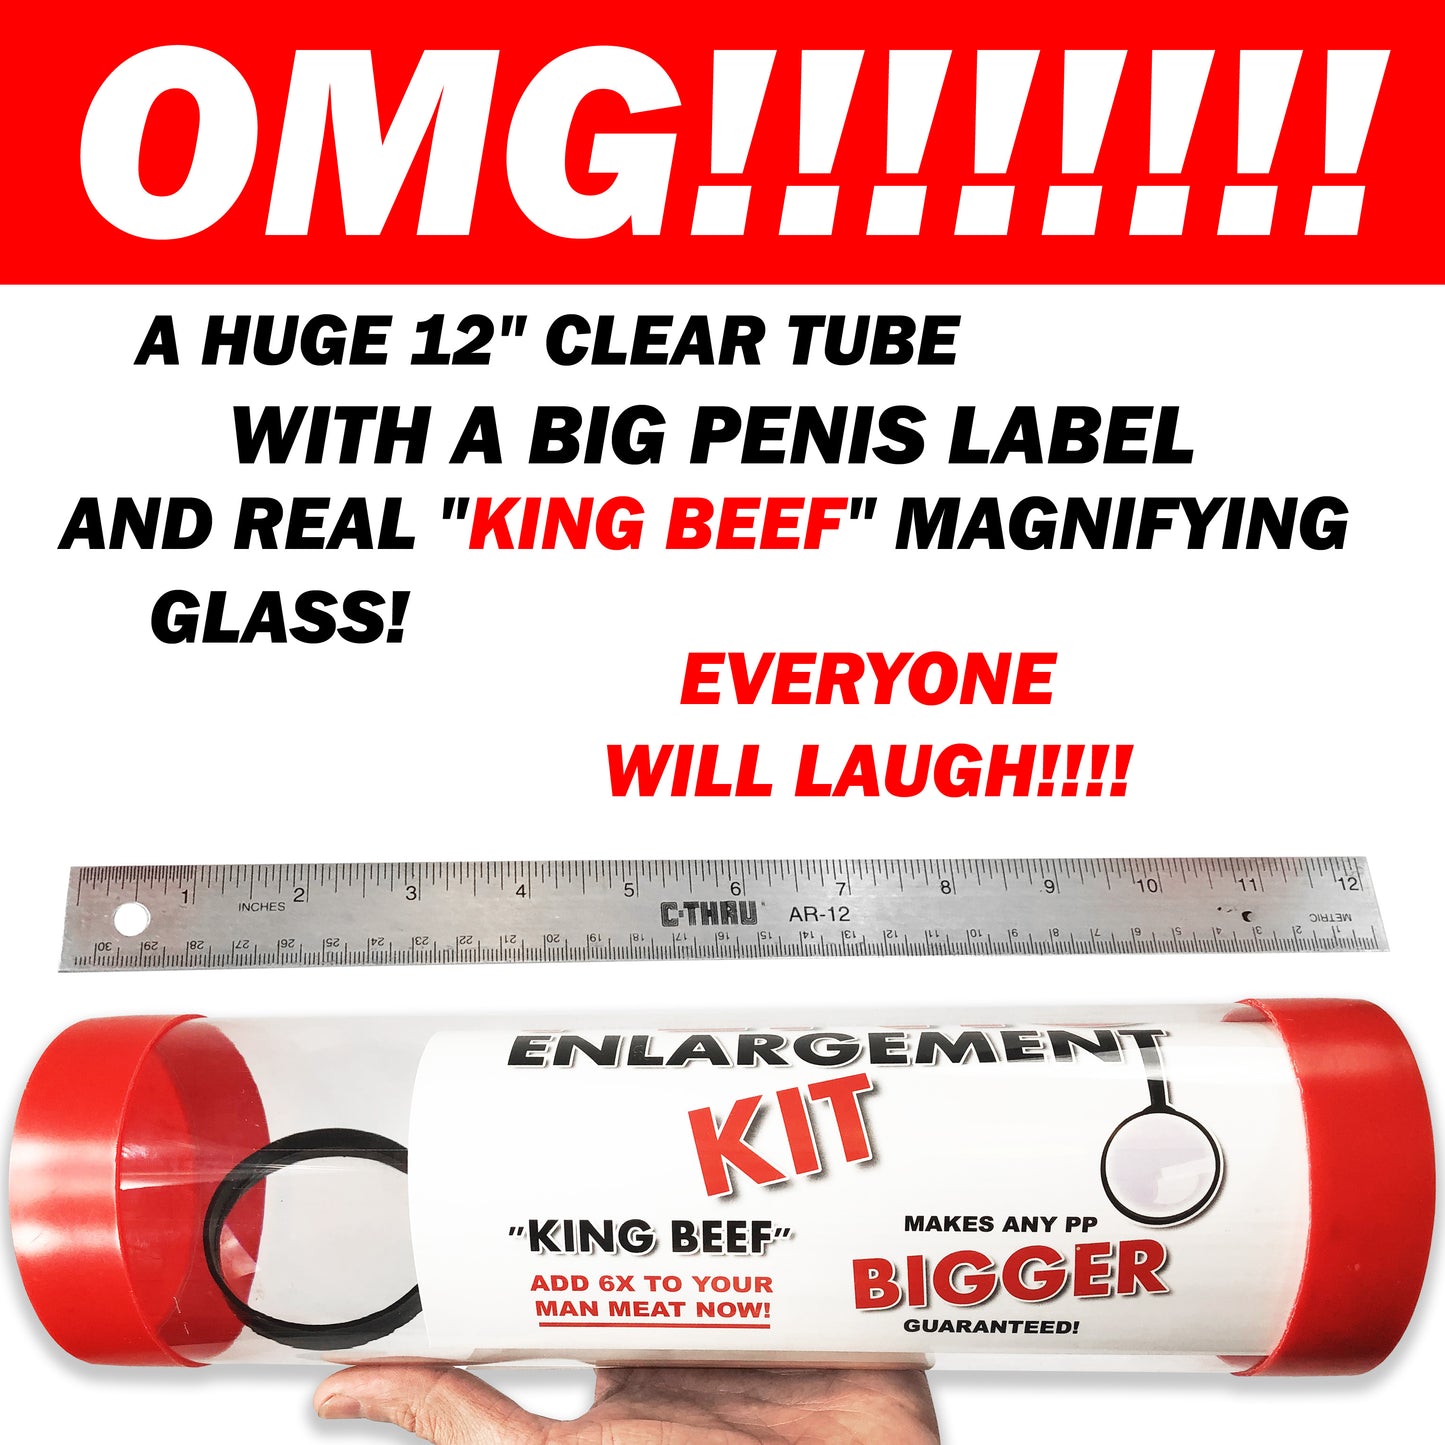 Penis Enlargement Kit Prank Tube Mail